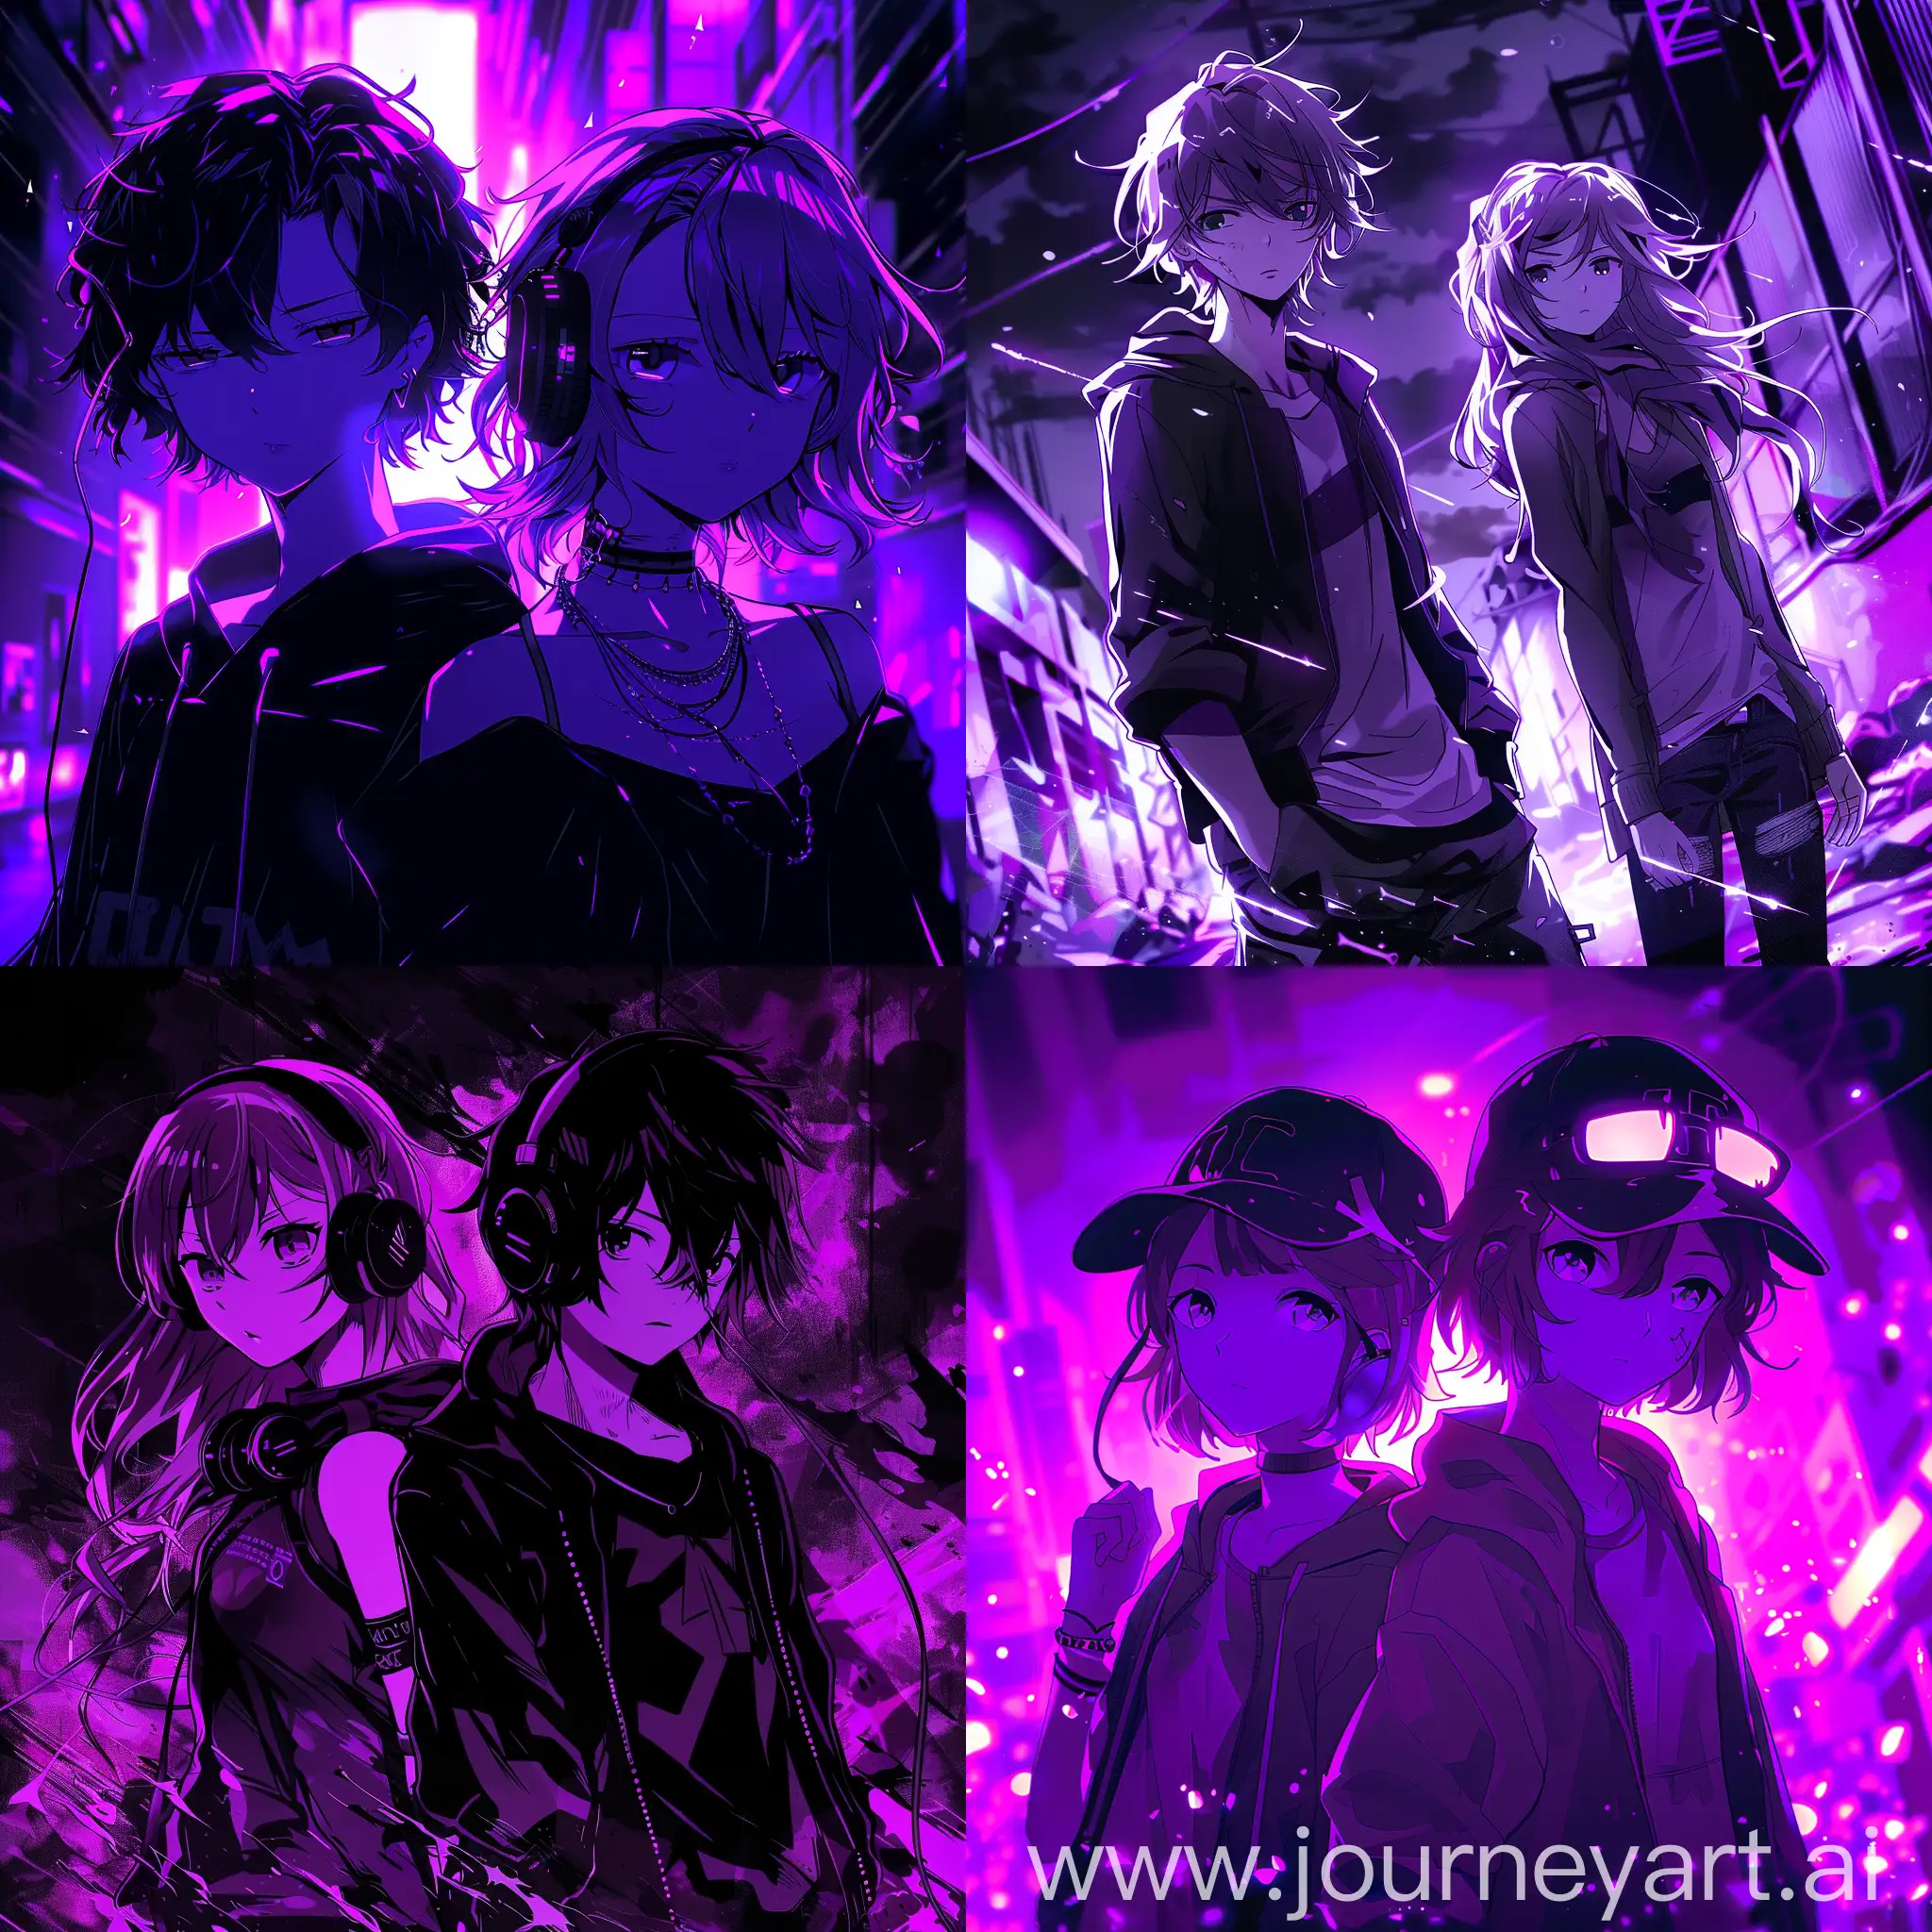 Dynamic-Anime-Duo-in-Breakcore-Style-HighDefinition-Purple-Tones